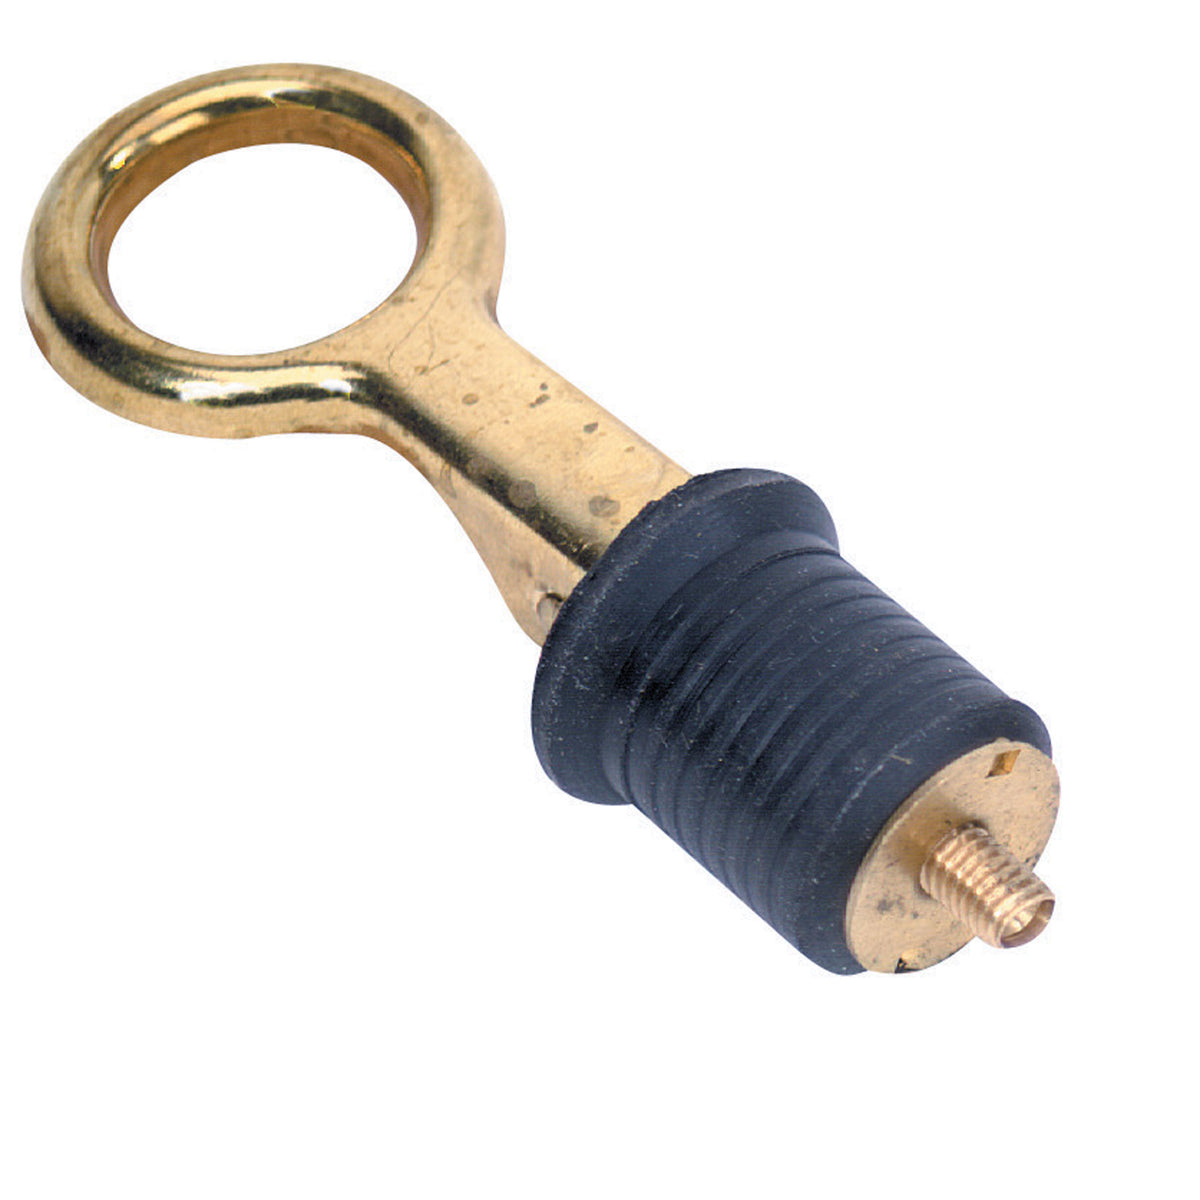 Moeller 029000-10 Snap-Tite Brass Bailer Plug - 1", Each